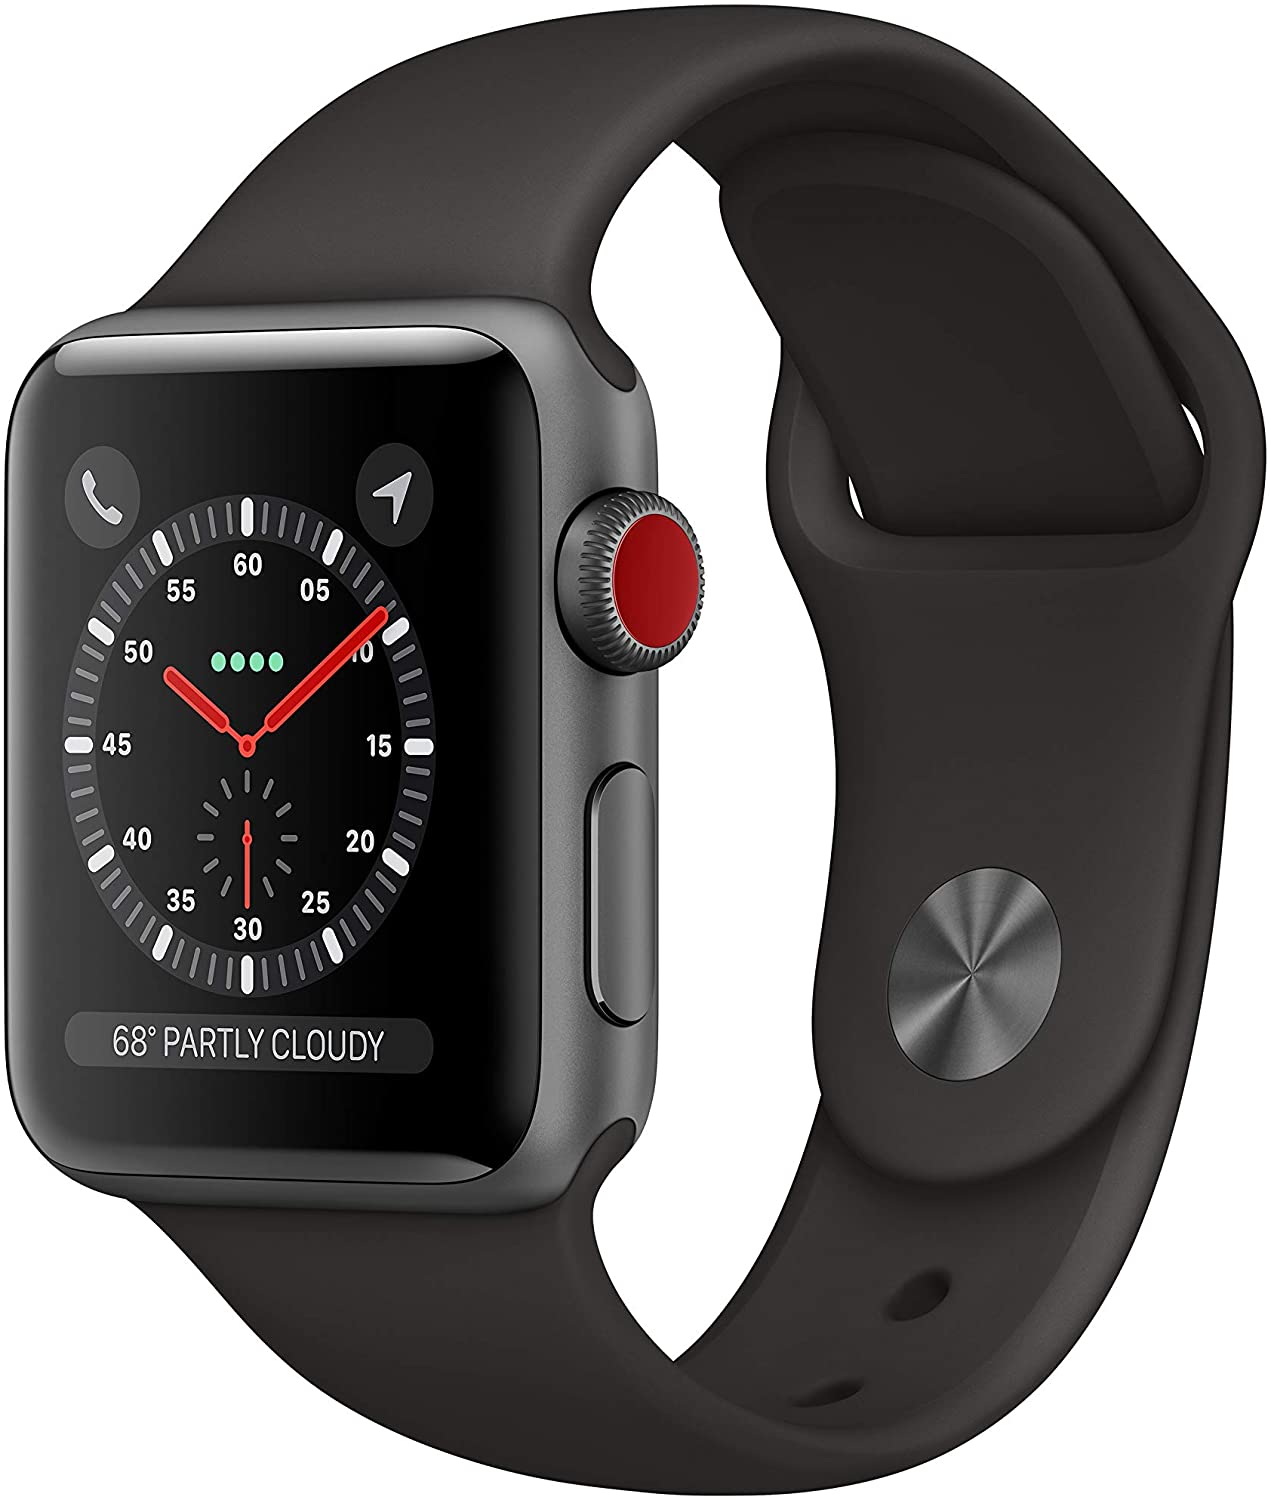 Apple Watch Series 3 Cellular Gray